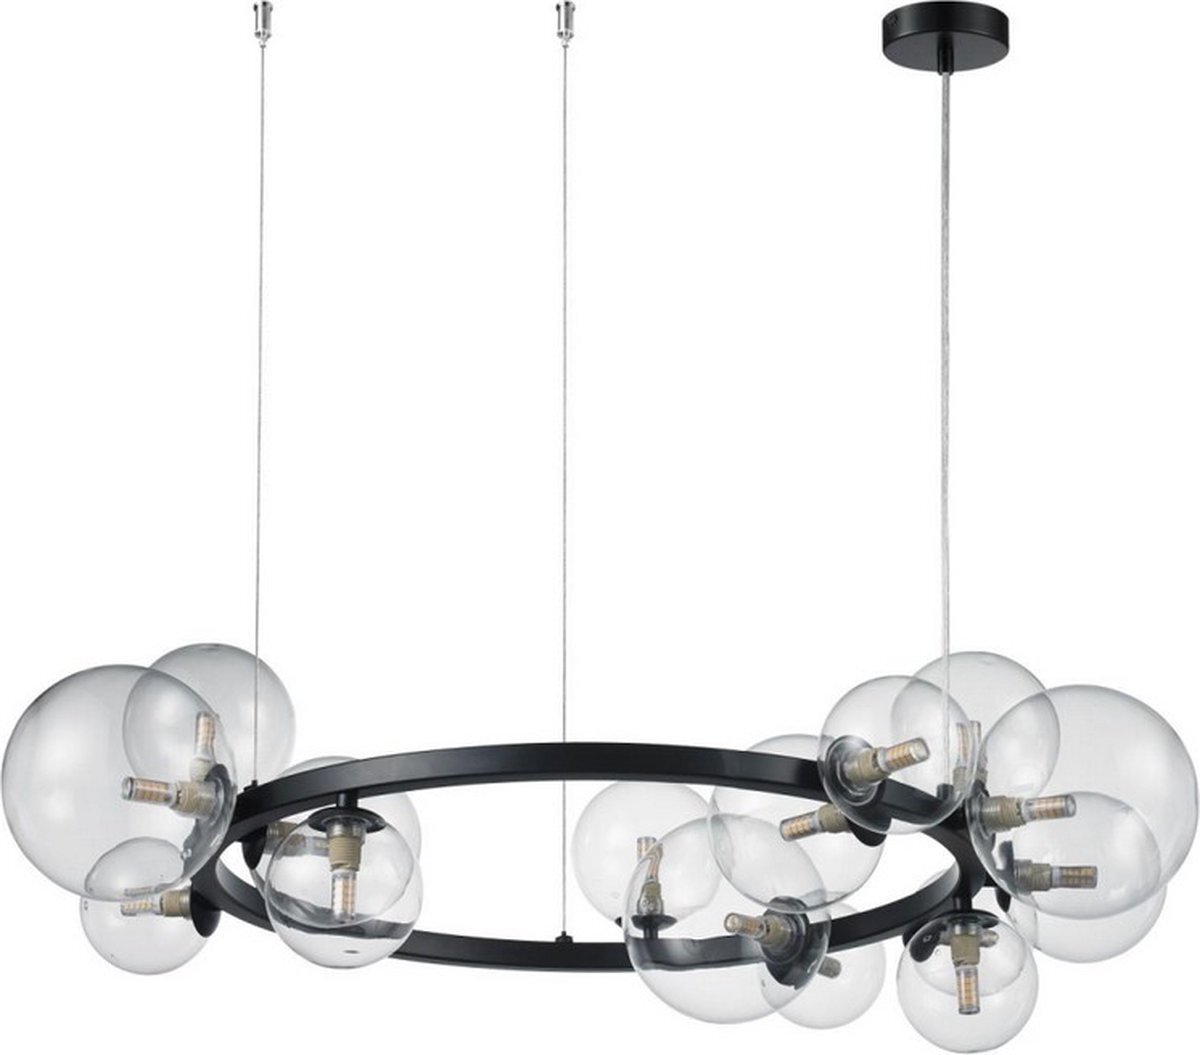 Rilimo Hanglamp Industrieel Plafondlamp Industriele Hanglamp Eetkamer - Plafondlamp Zwart Glas 24 glazen bollen 85cm